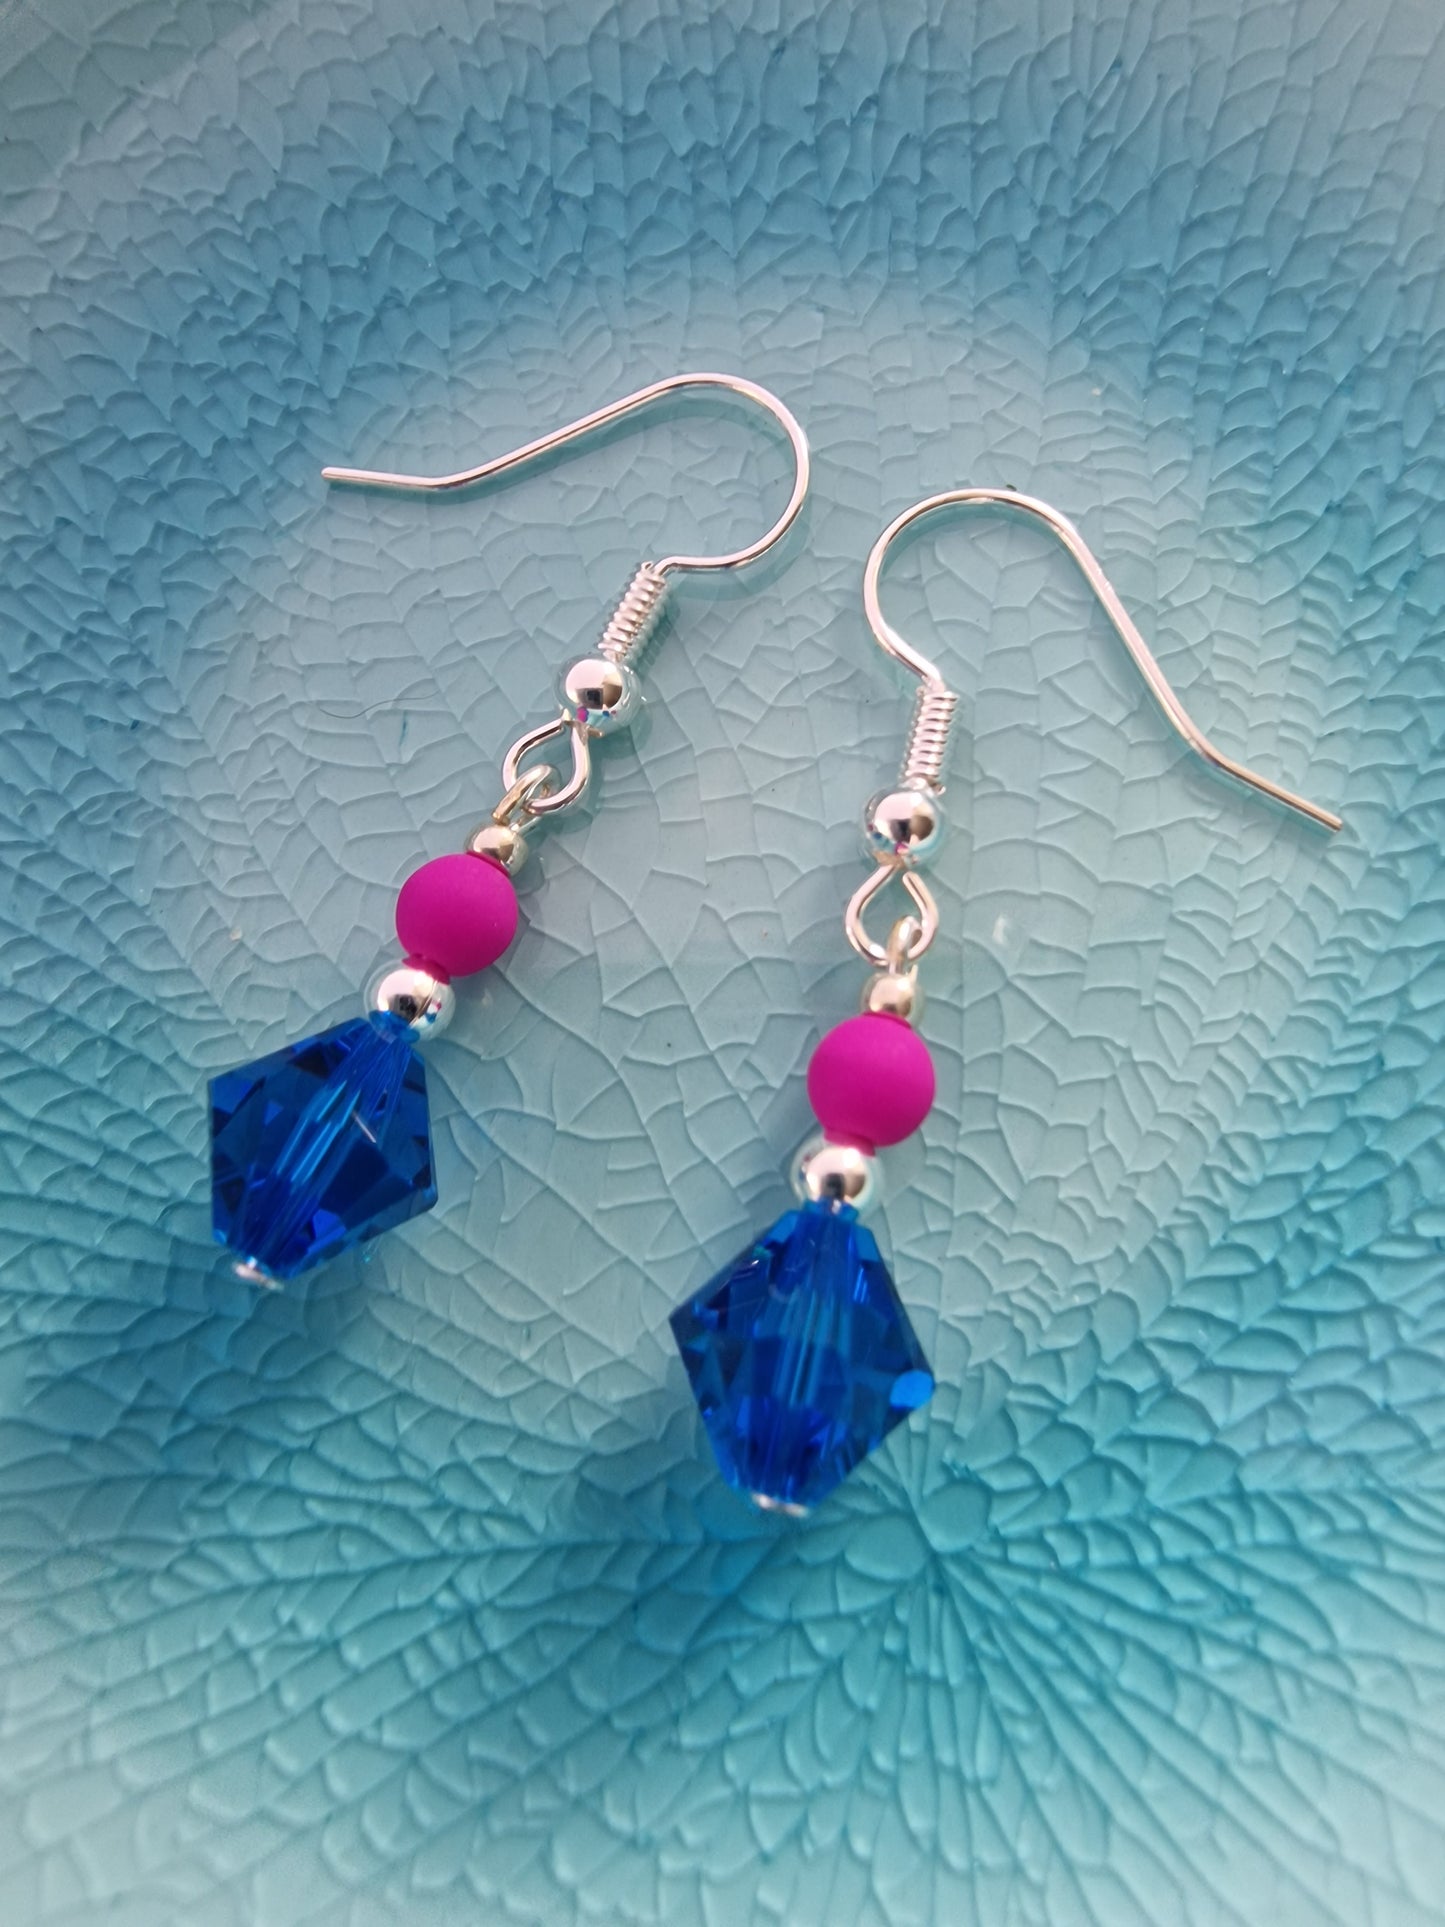 Capri Blue Swarovski Crystal and Orchid Bead Earrings